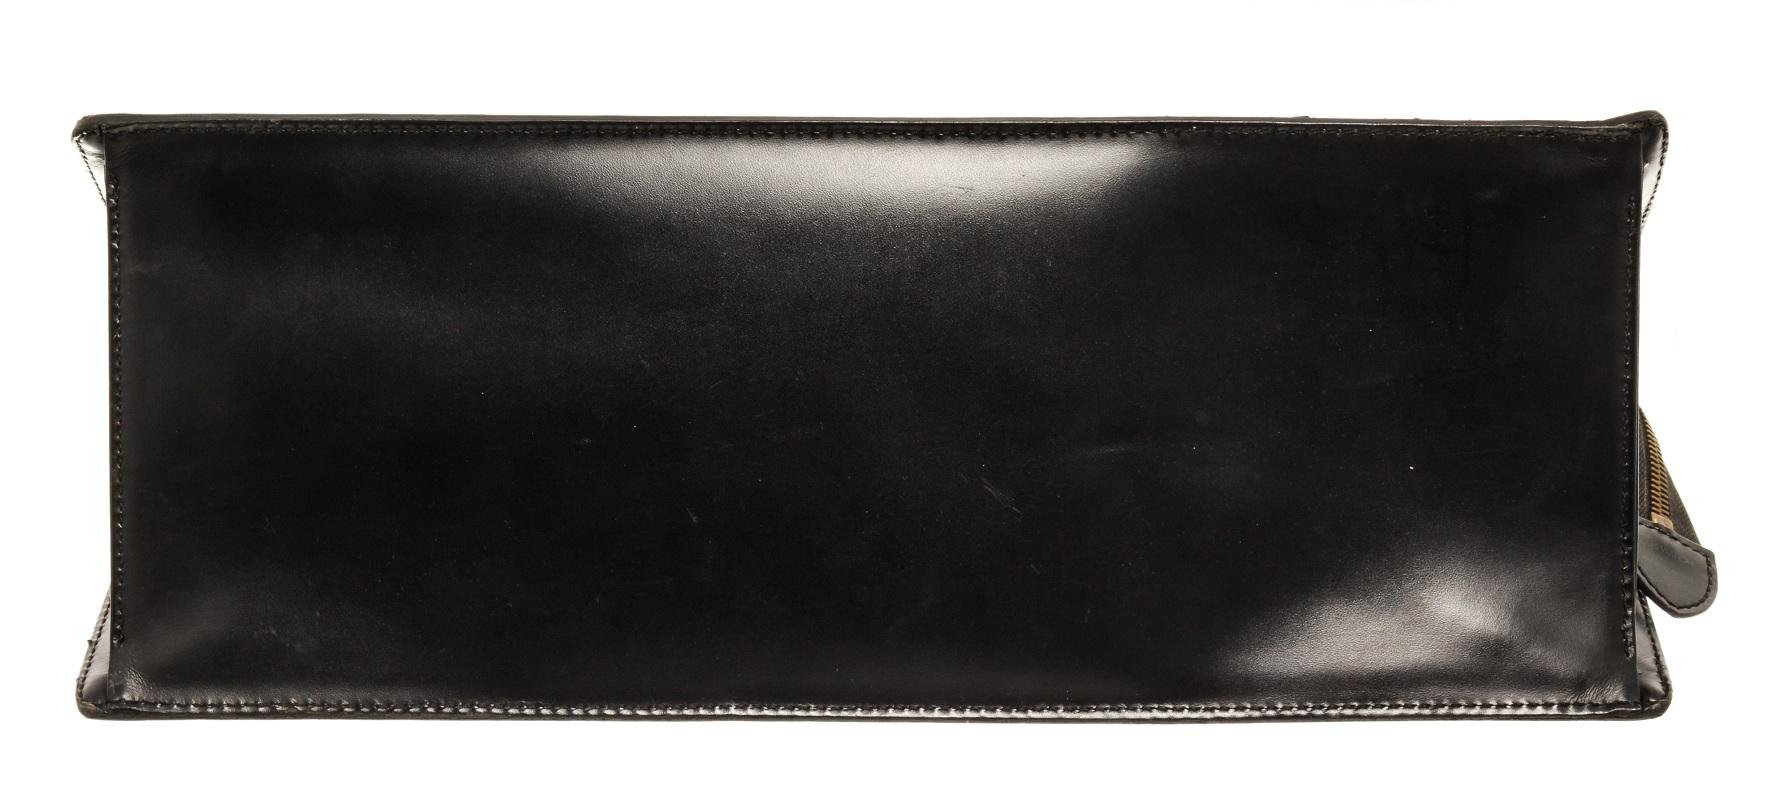 Women's Louis Vuitton Black Epi Leather Sac Triangle Handbag